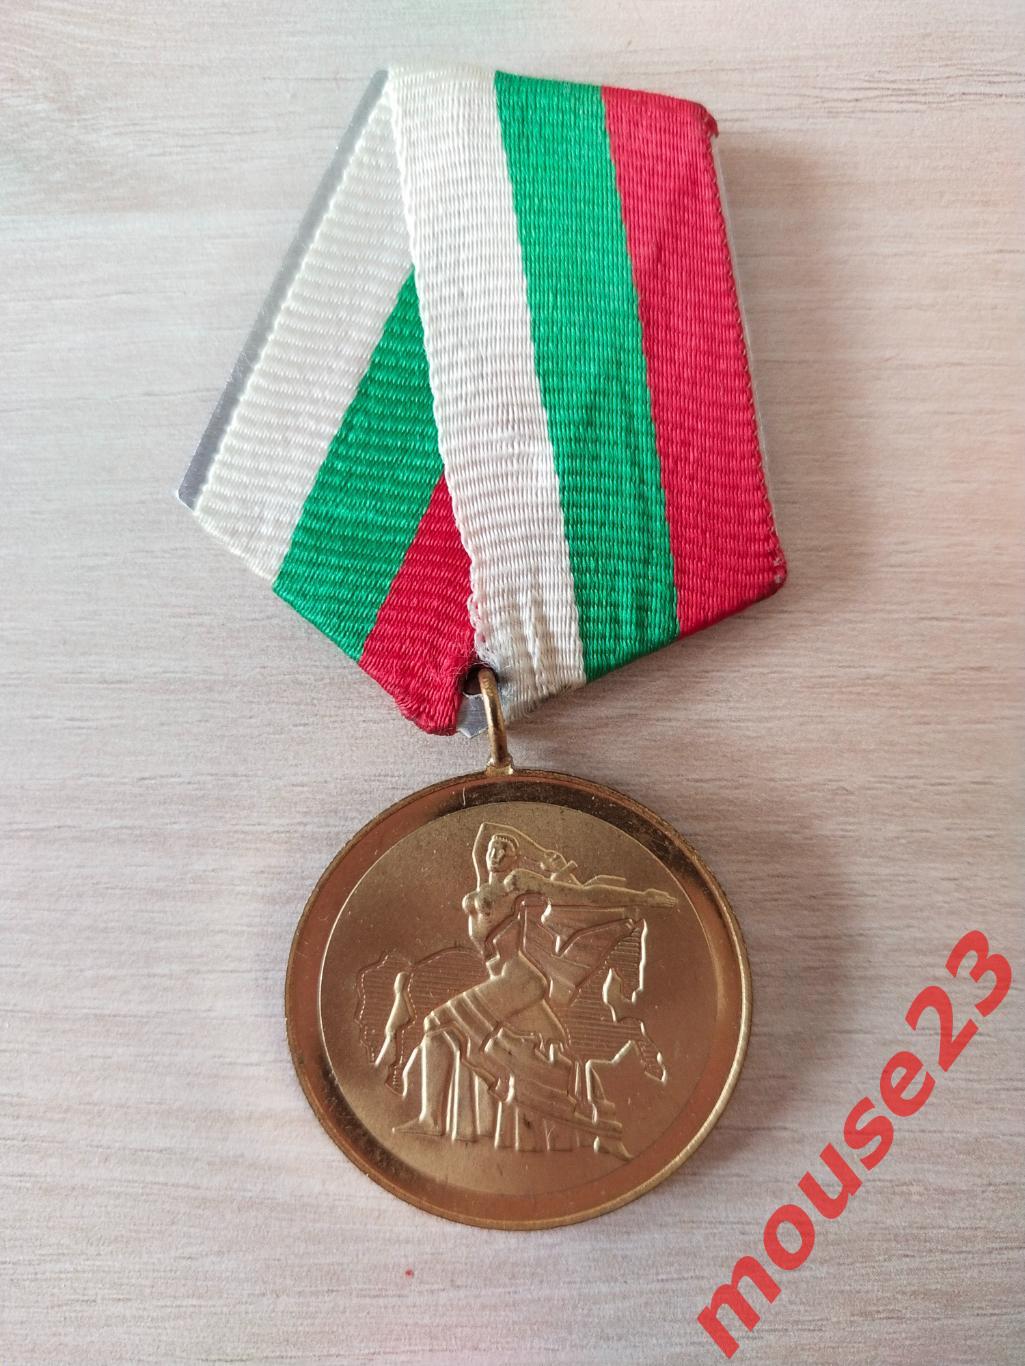 Болгария медаль 1300 лет Болгарии